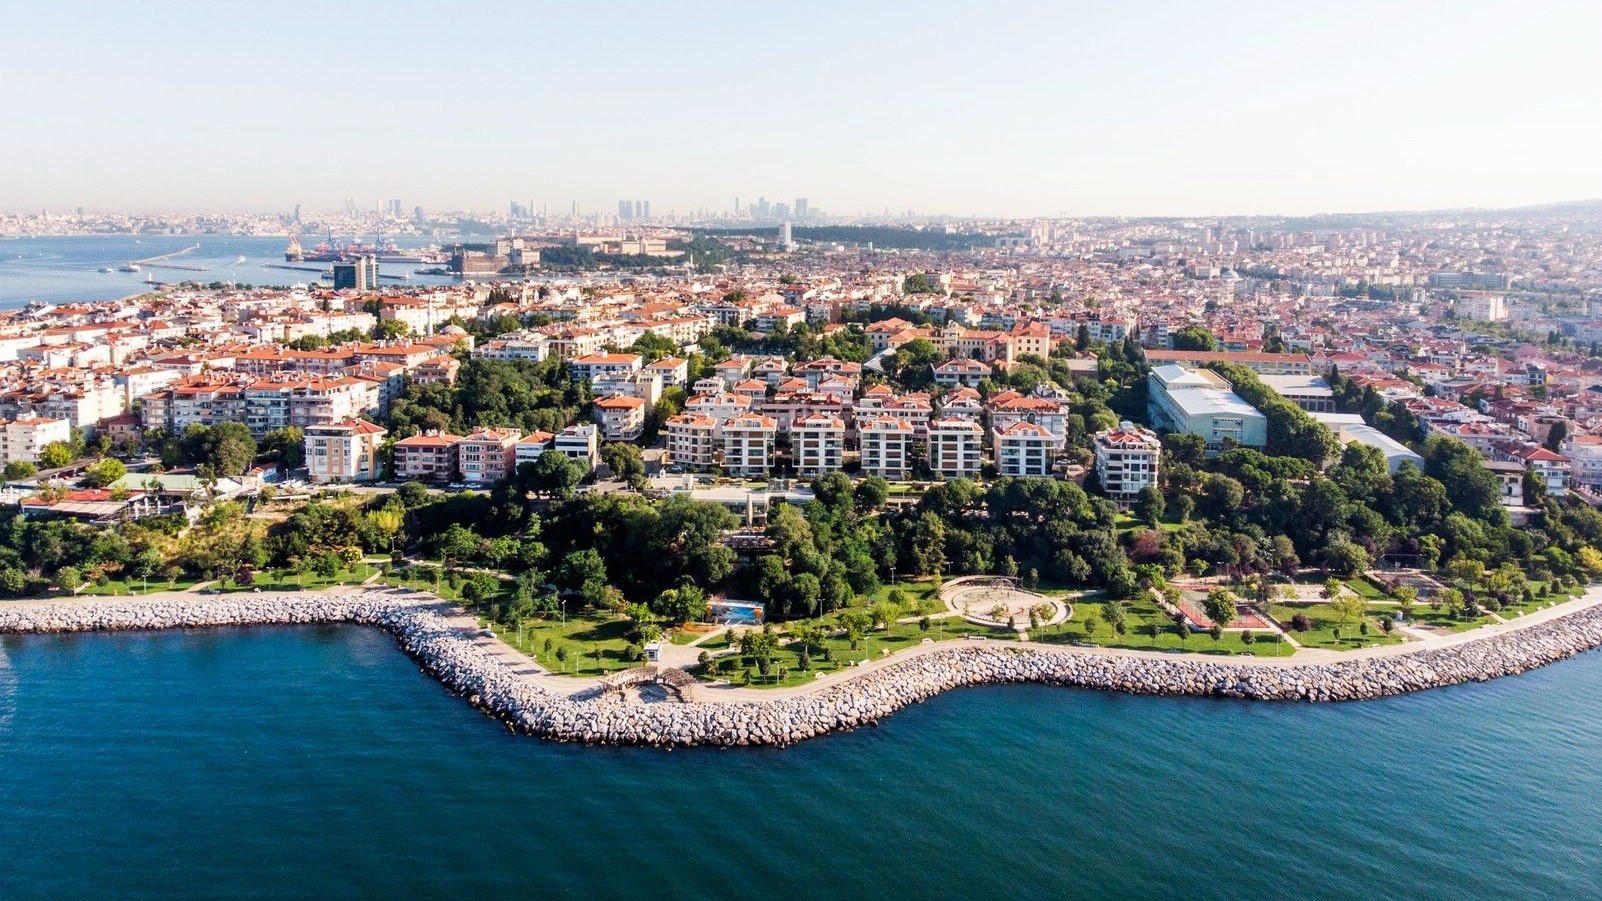 Moda Beach Park: A Coastal Haven in the Heart of Istanbul